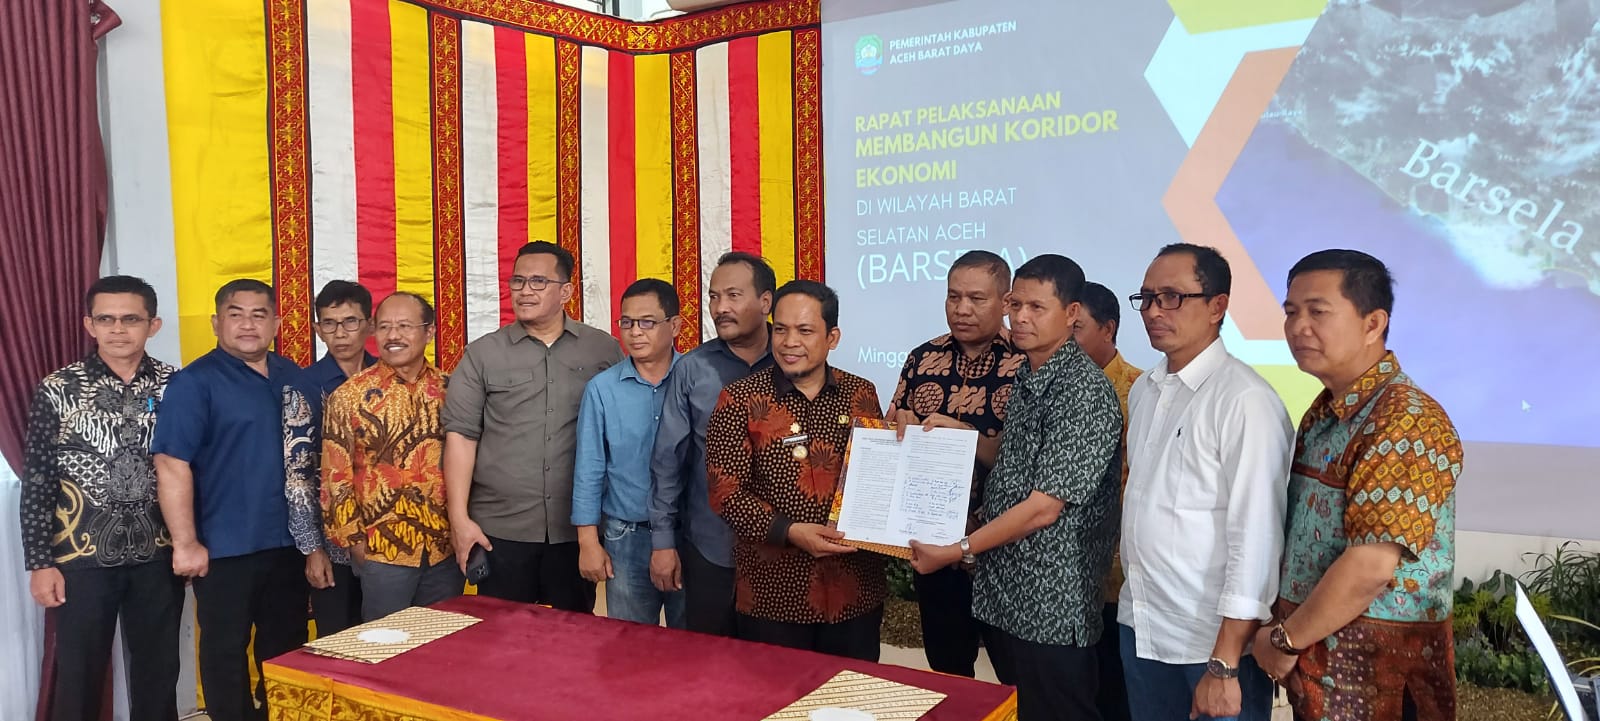 Sejumlah Tokoh Berkumpul Bahas Rencana Pembangunan Koridor Ekonomi Barat Selatan Aceh